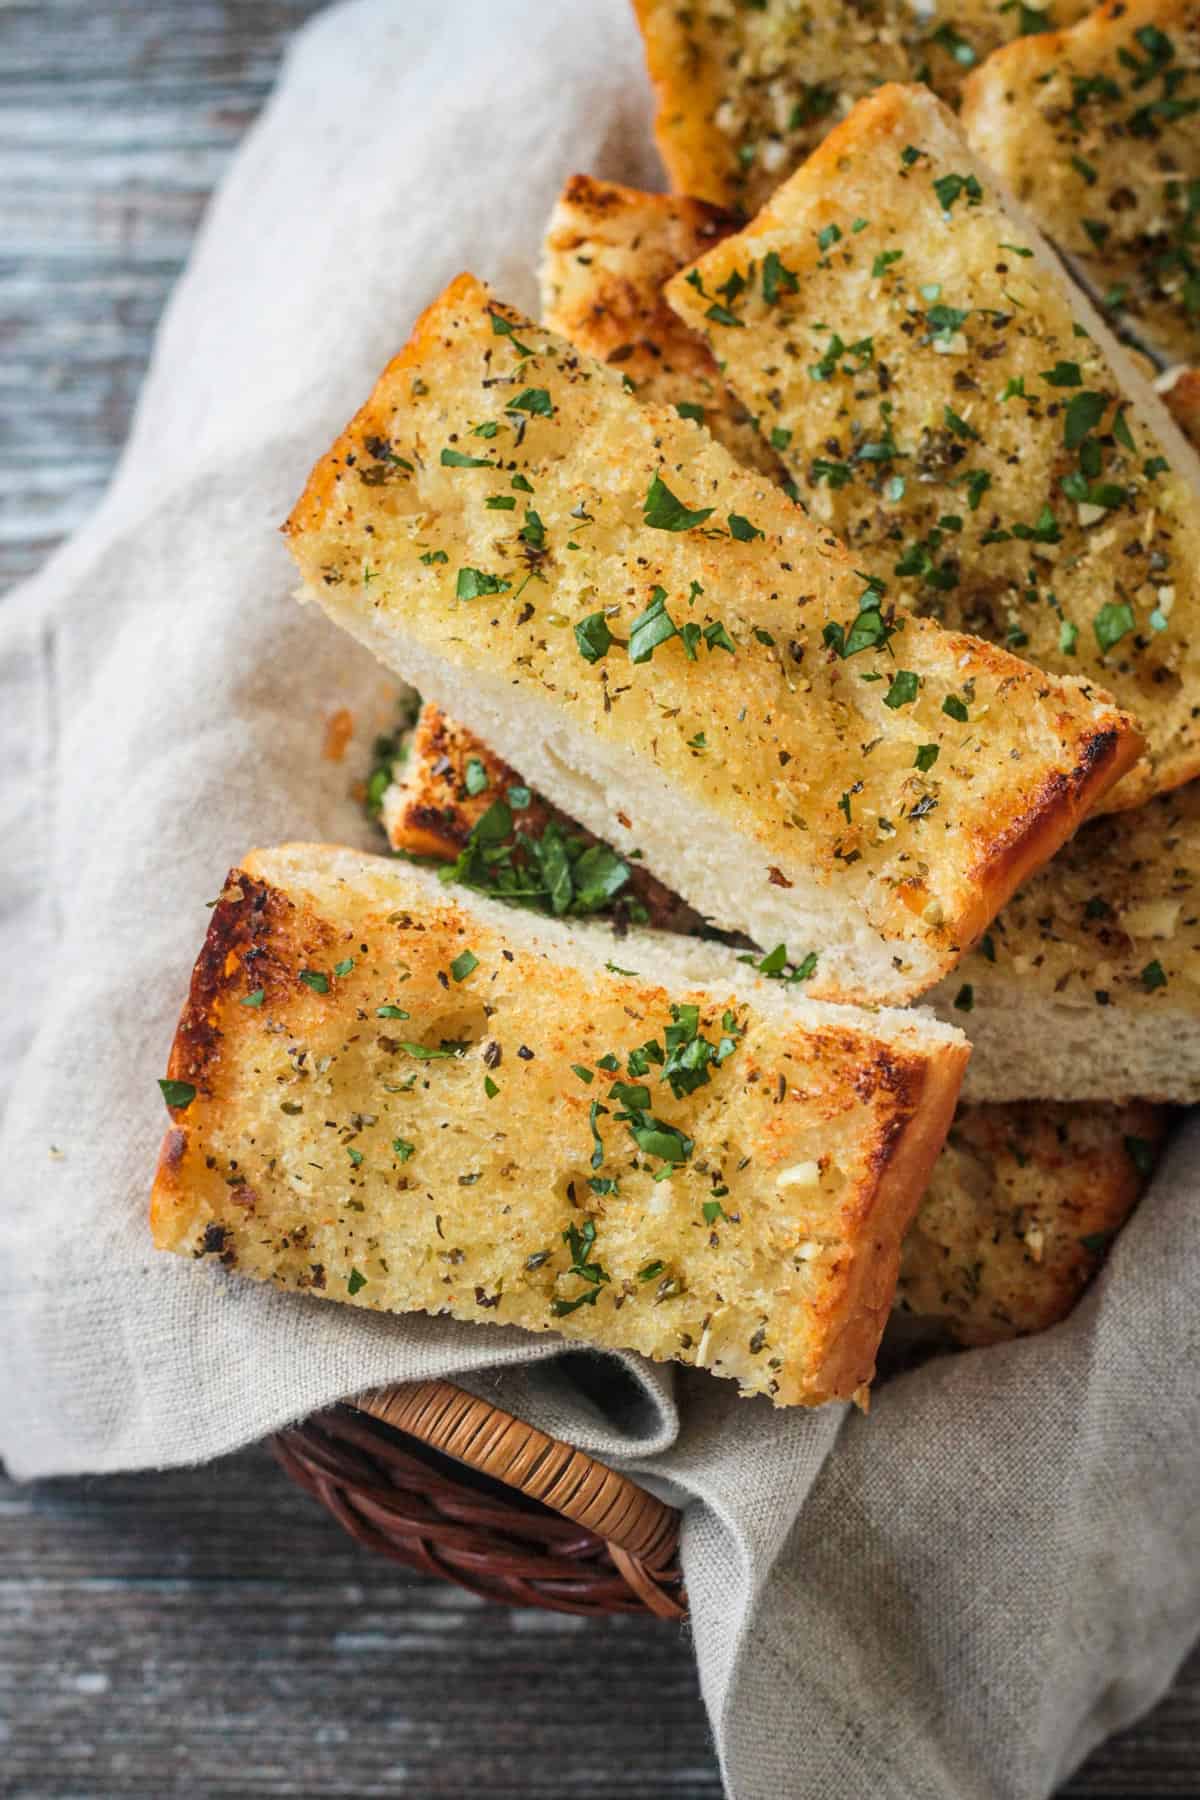 Slices of fresh baked vegan garlic bread in a basket.